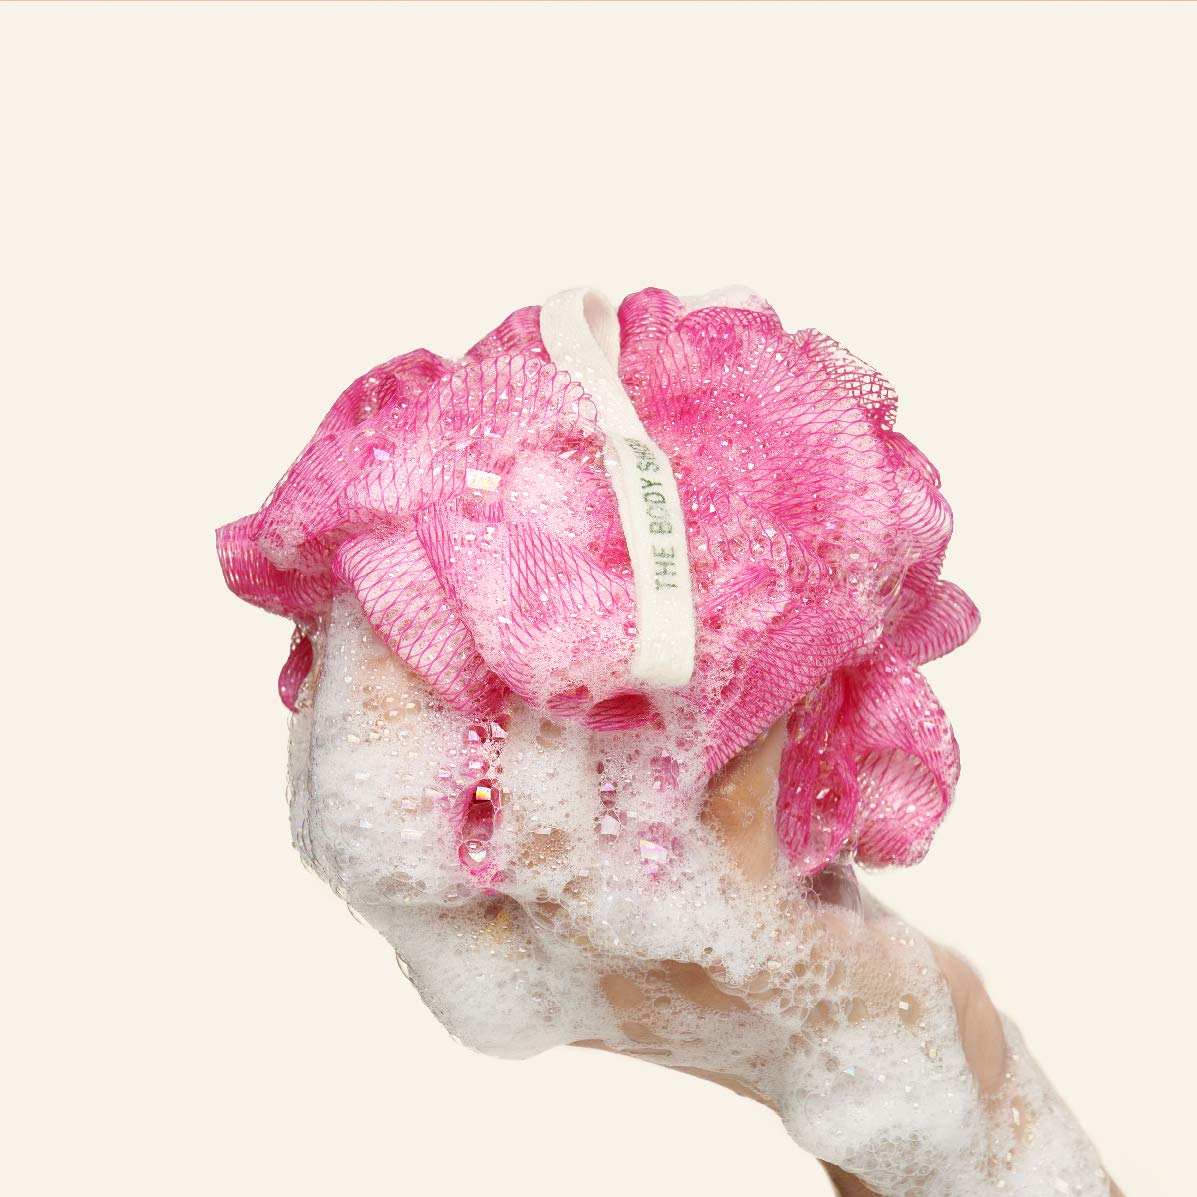 The Body Shop ABL-0001 Ultra Fine Bath Lily, Pink